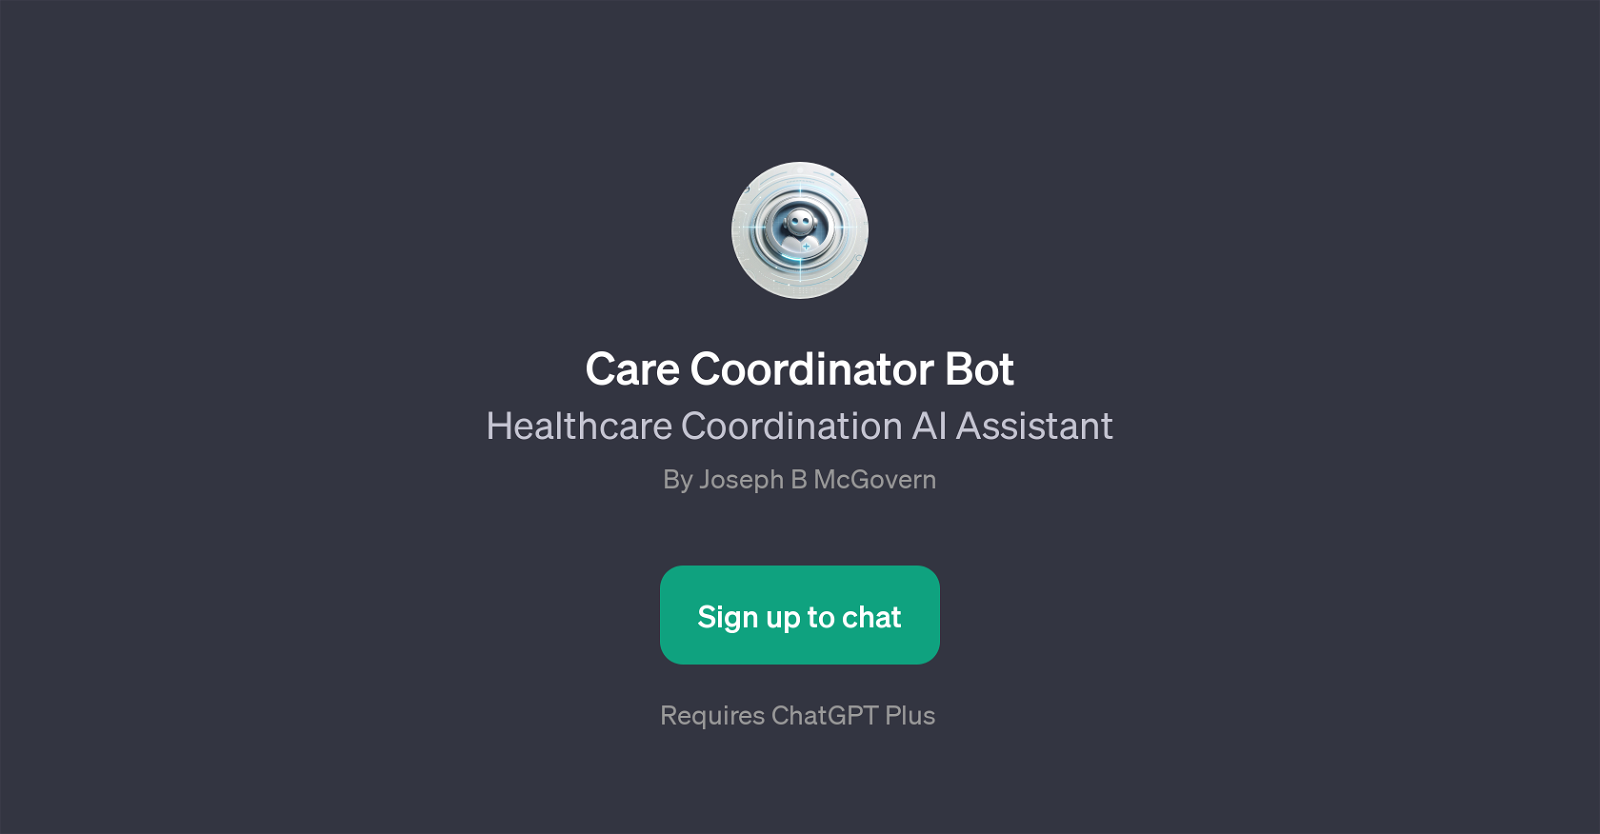 Care Coordinator Bot website